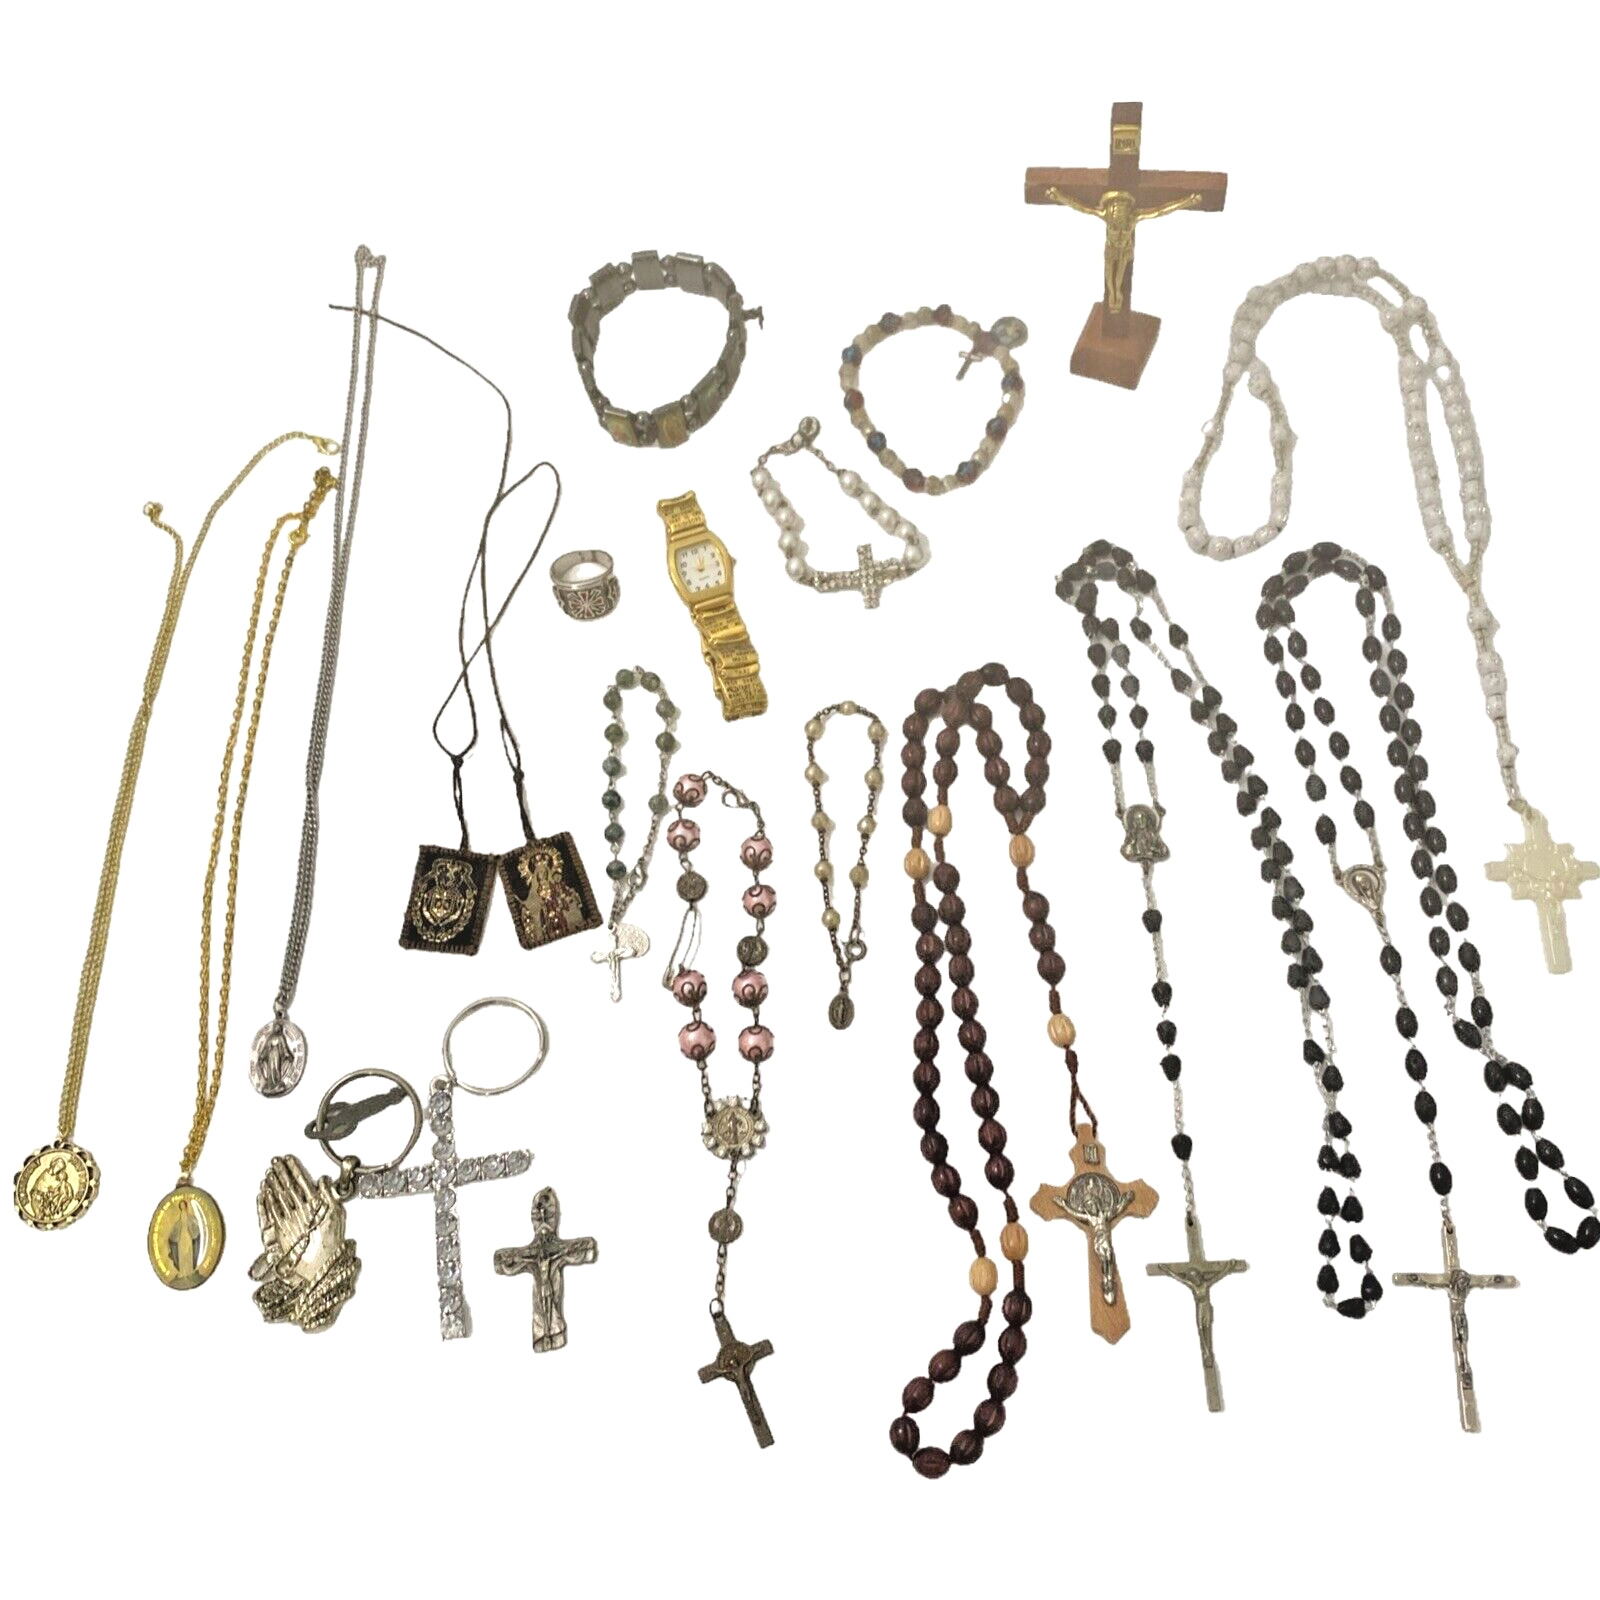 Vintage Religious Catholic Rosary Necklace Bracelet Jewelry lot